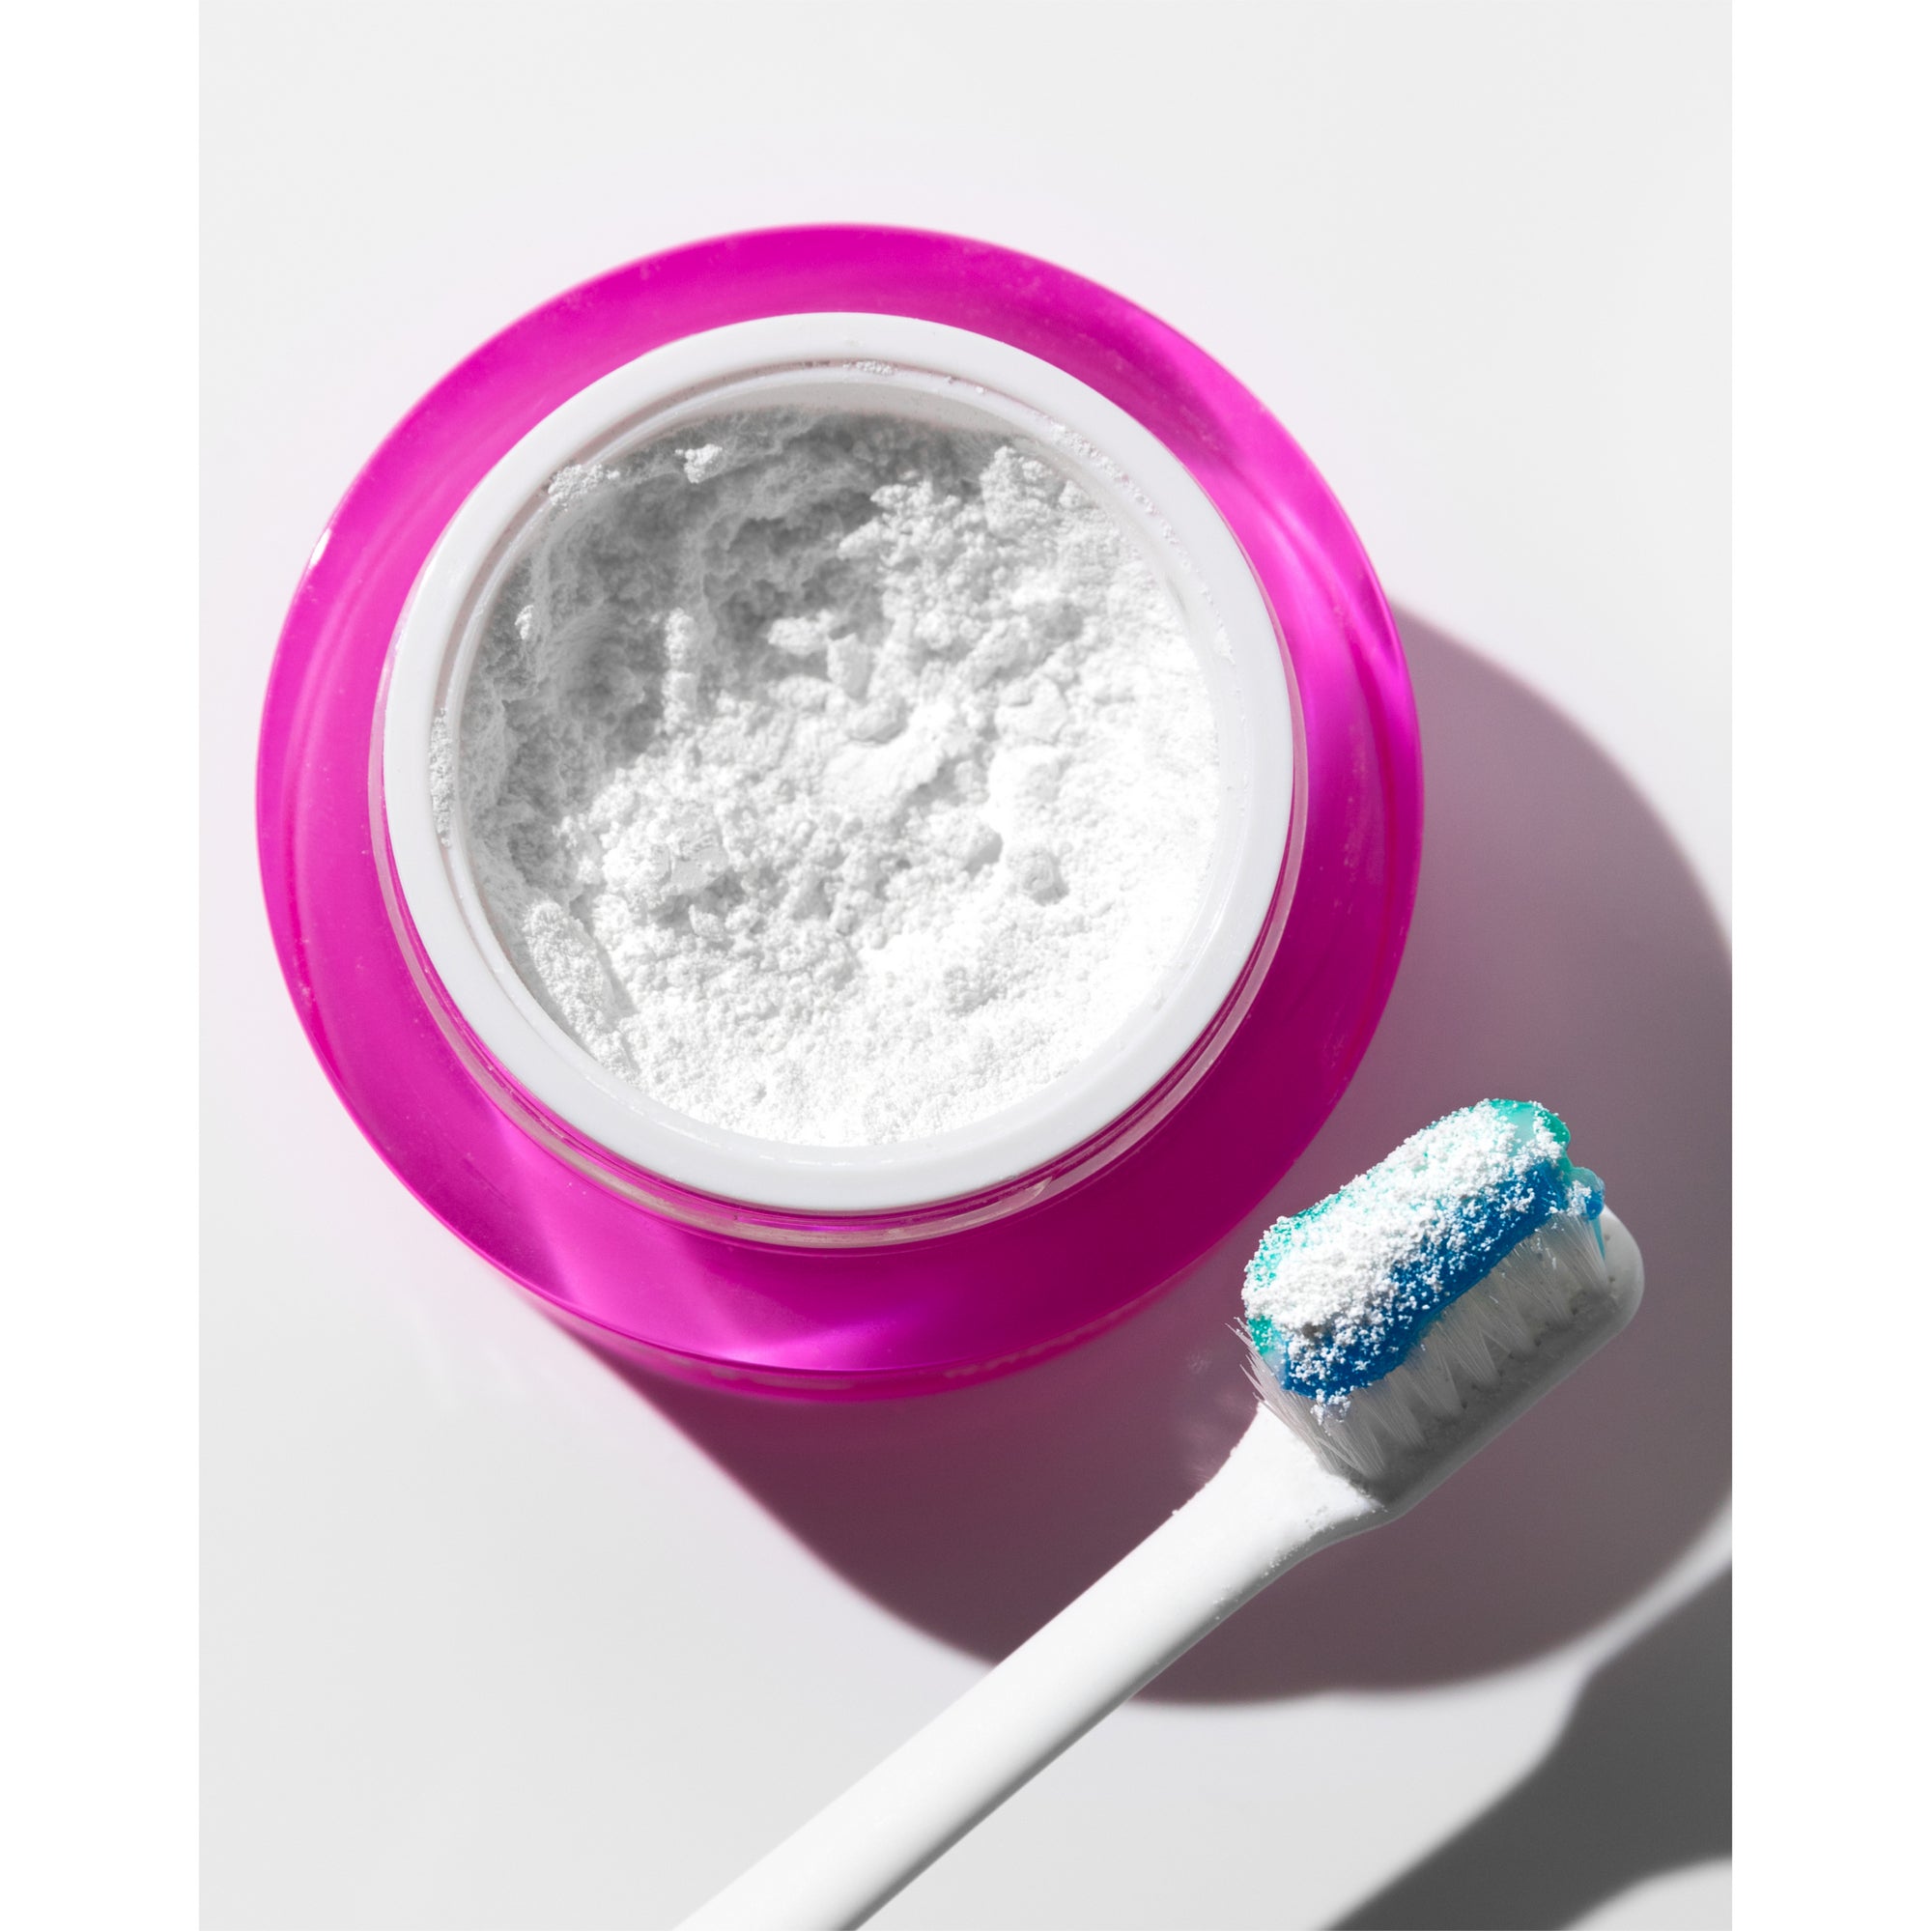 Hismile PAP+ Whitening Powder 12g lid of with brush